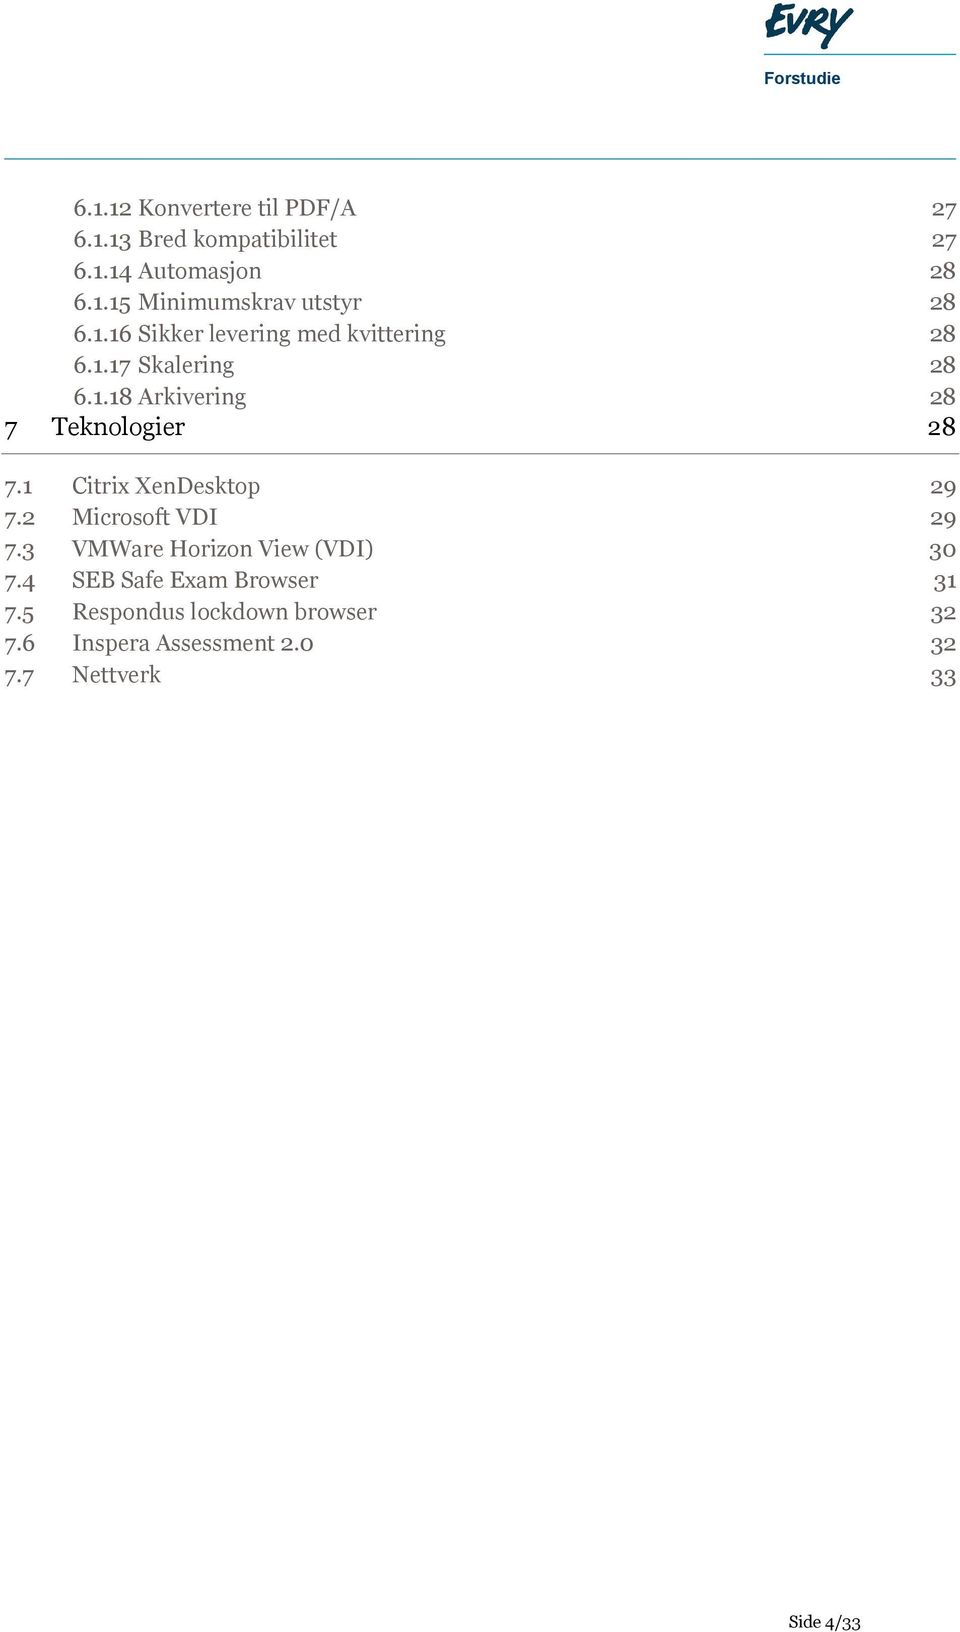 1 Citrix XenDesktop 29 7.2 Microsoft VDI 29 7.3 VMWare Horizon View (VDI) 30 7.